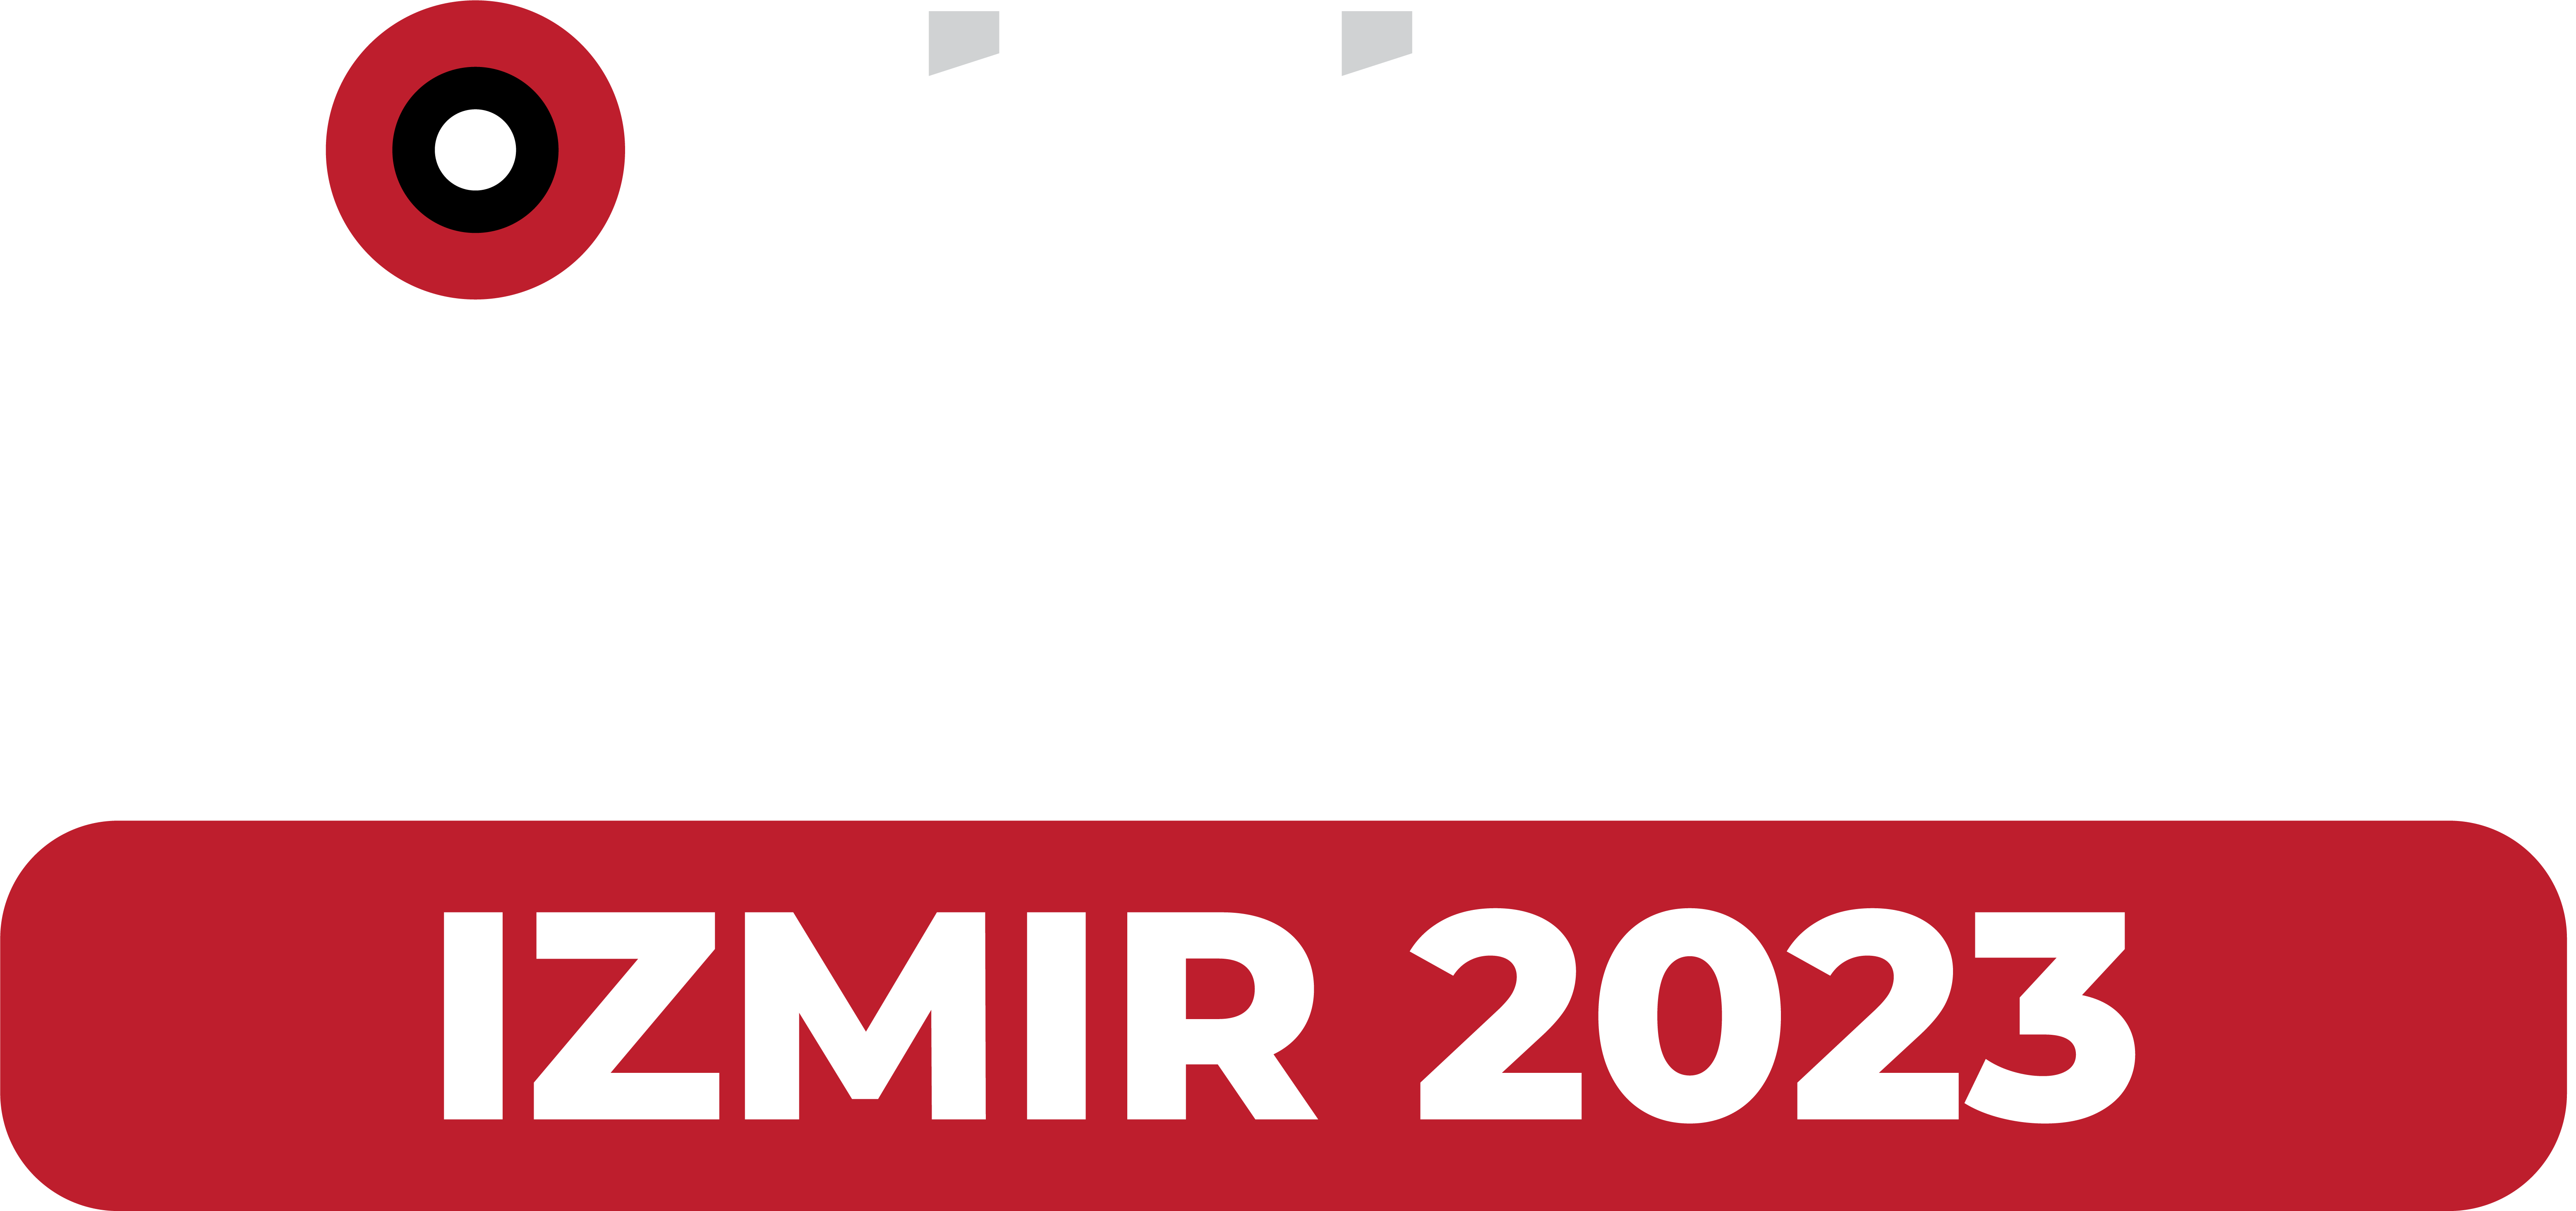 mobidictum network izmir 2023 white 1@4x